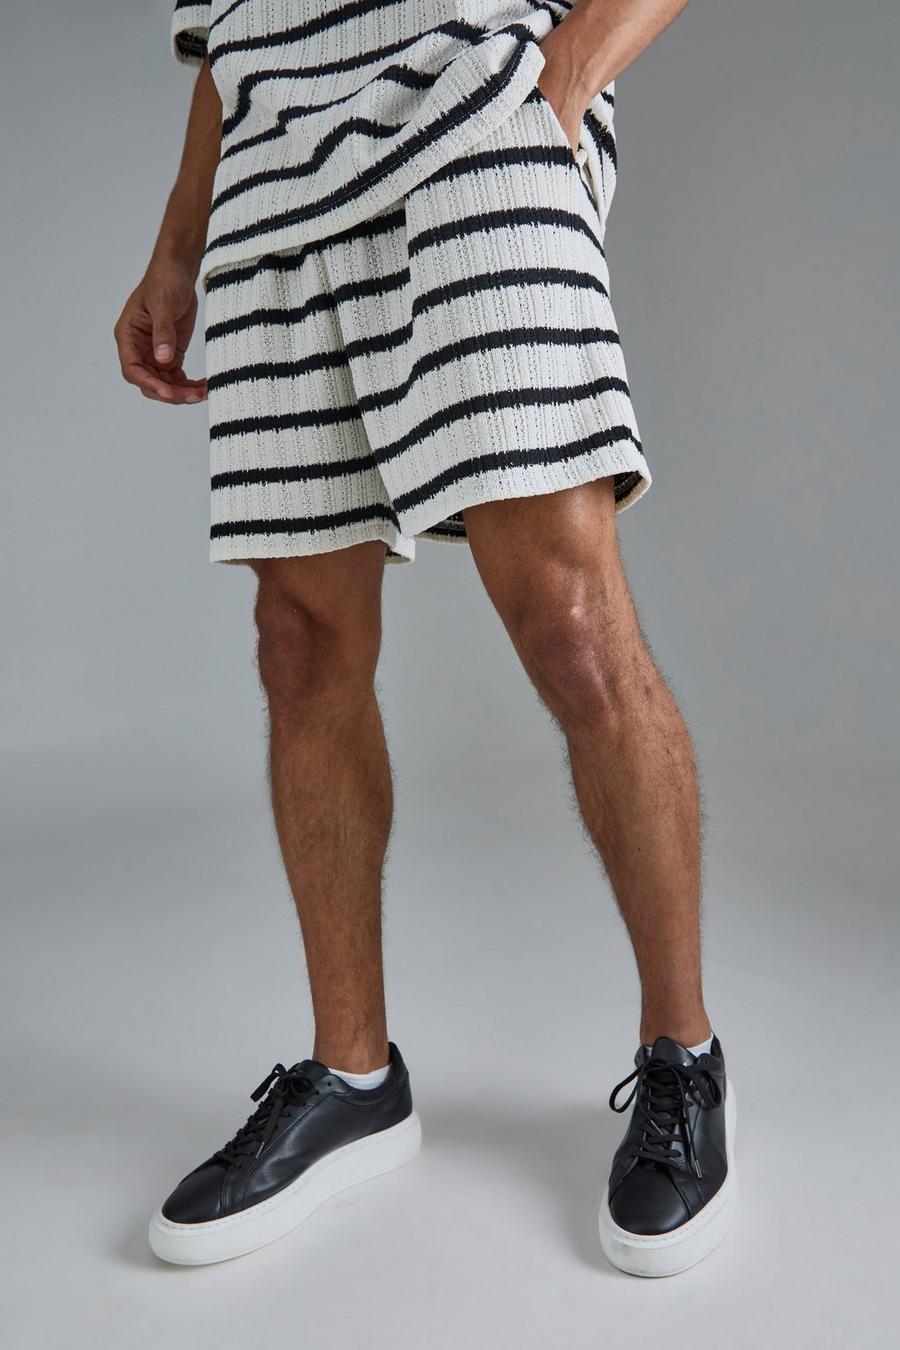 Black Boxy Textured Stripe Shorts